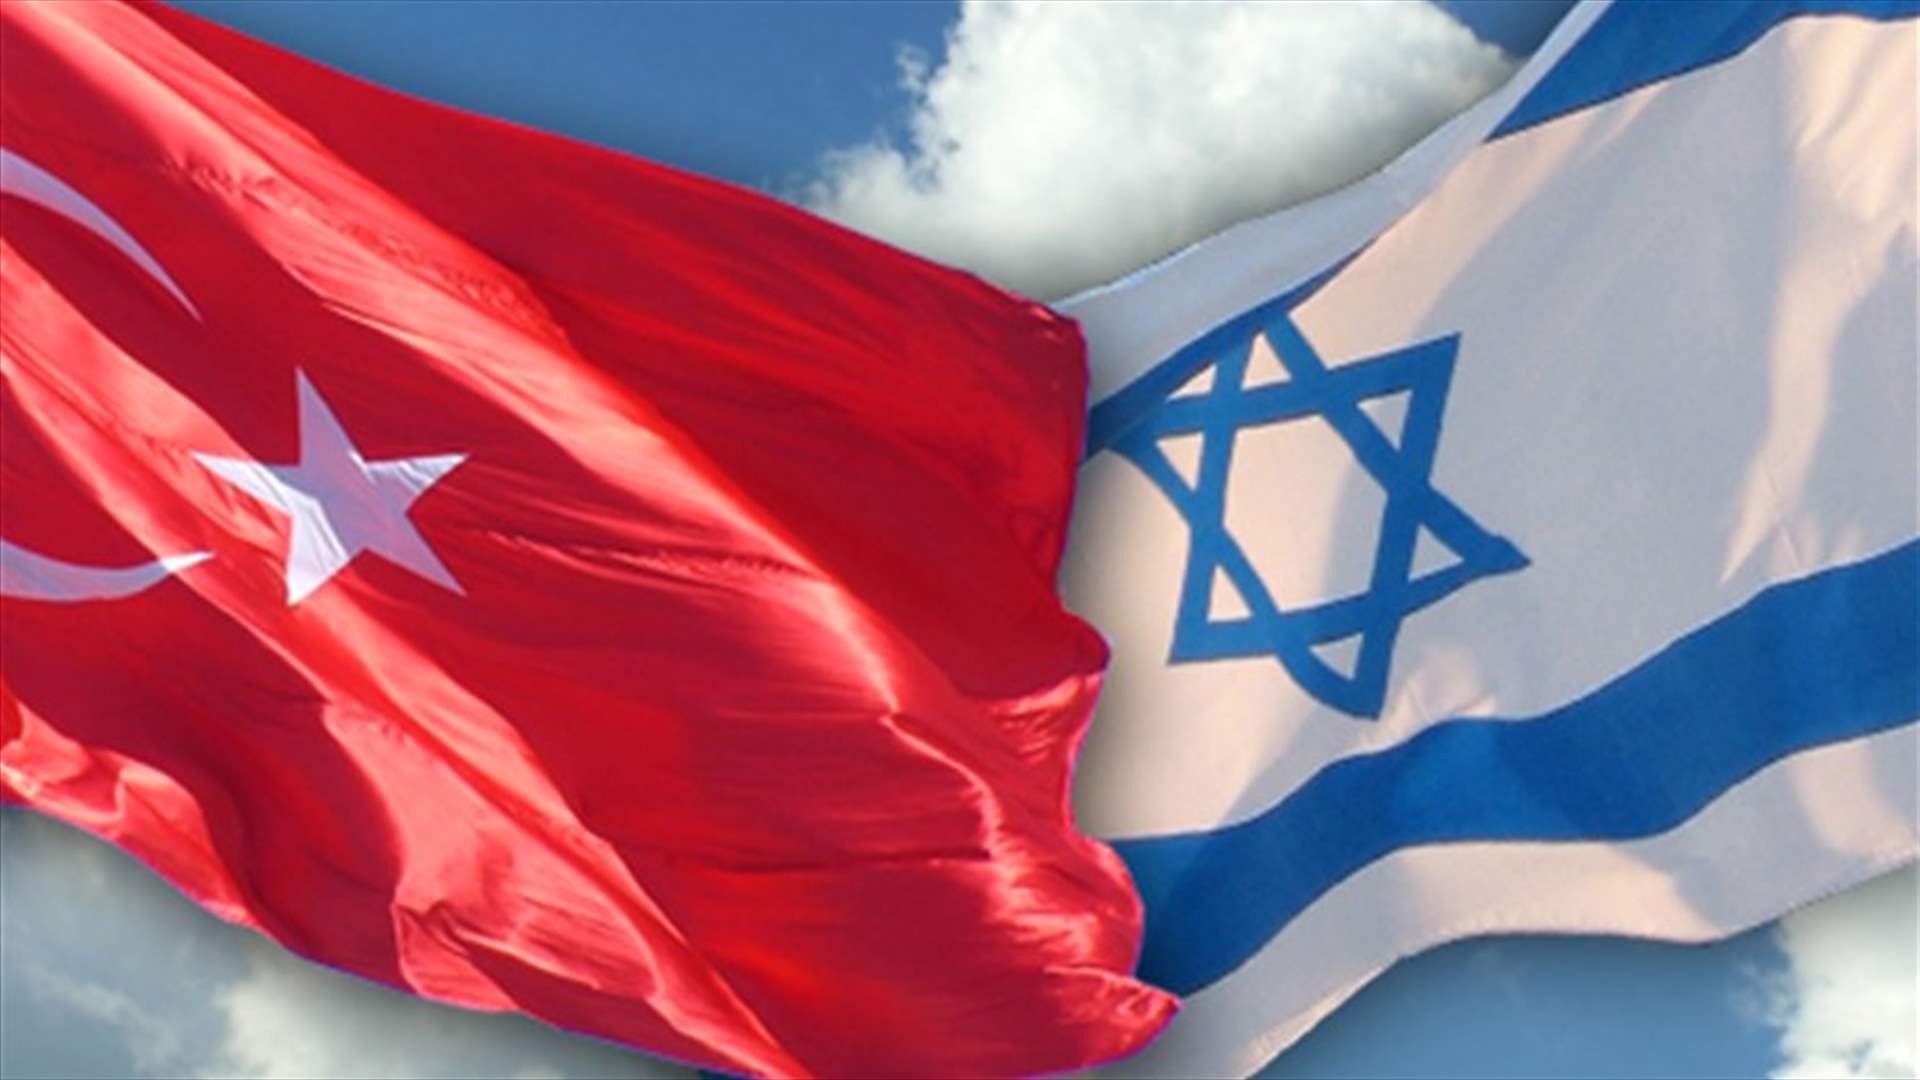 Turkey, Israel still discussing normalisation - Turkish deputy PM